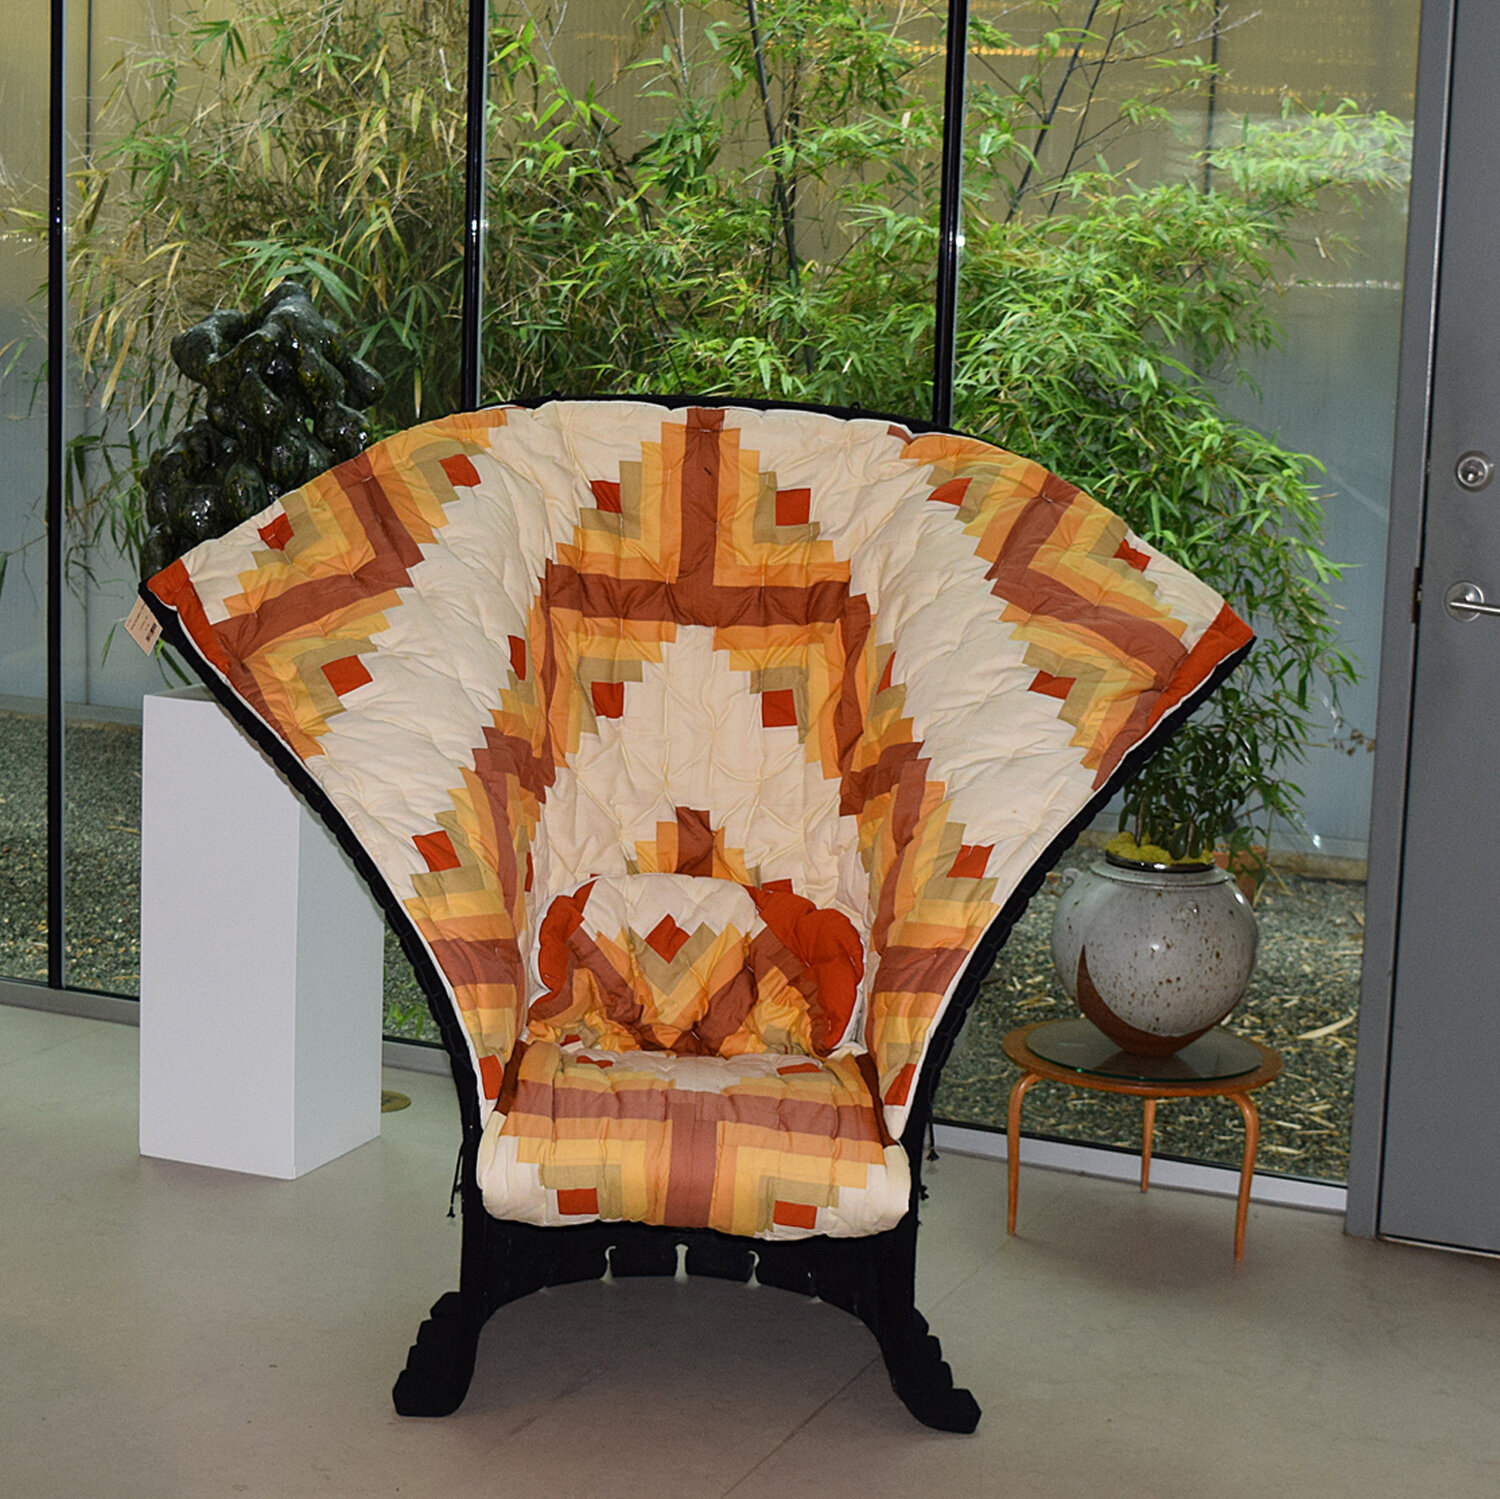 SOLD Gaetano Pesce /Calvin Klein FELTRI Chair Limited Edition 2018 — Collage